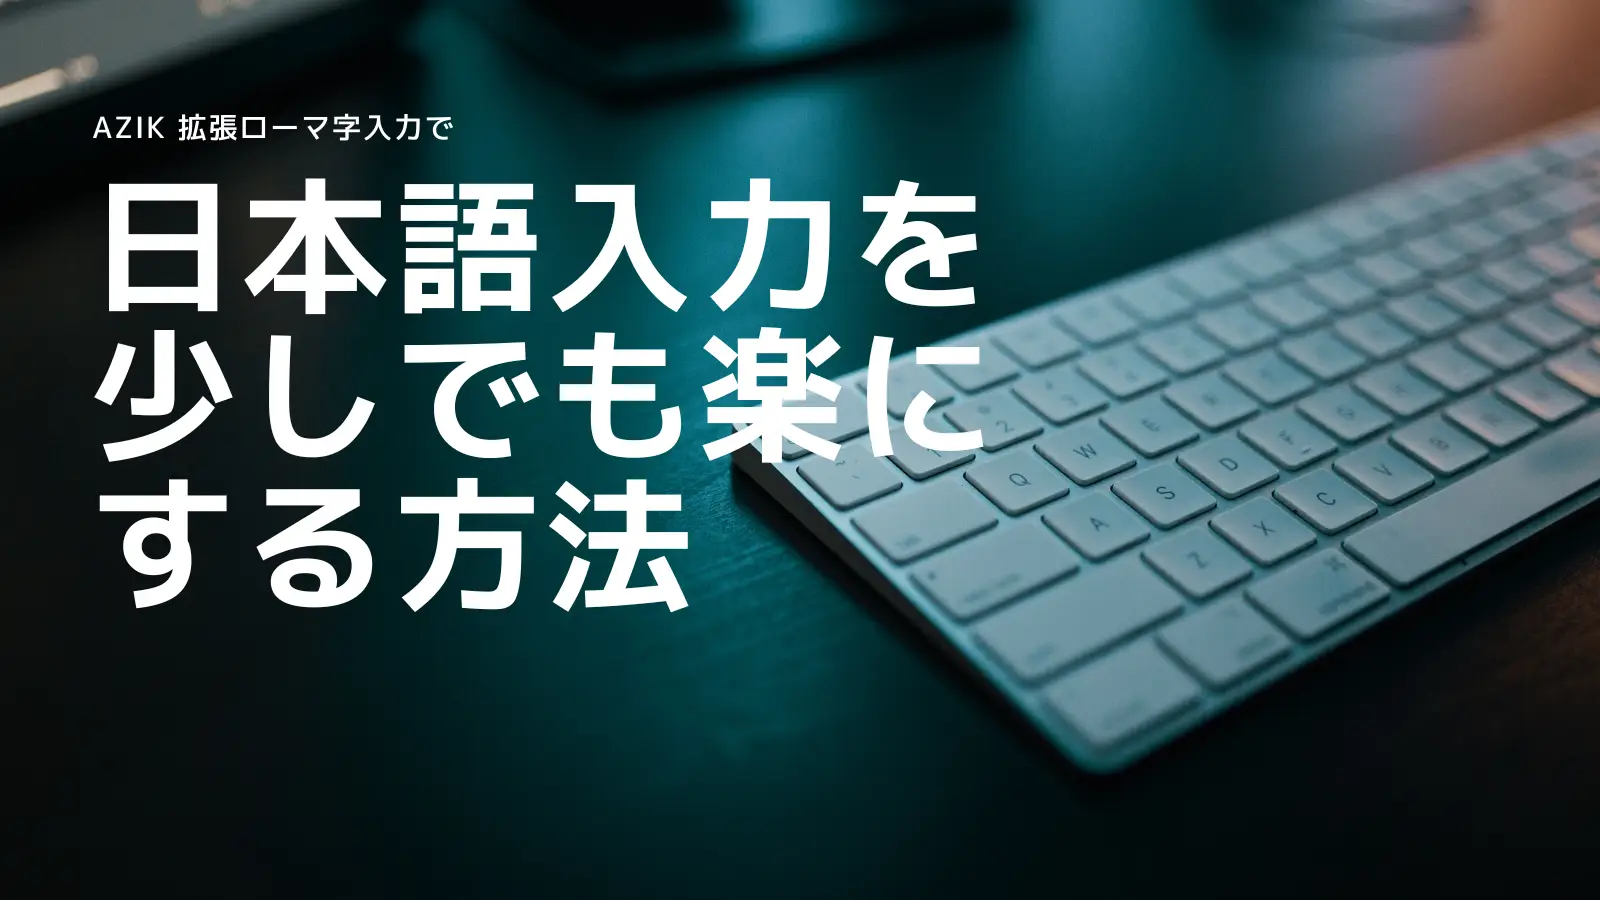 AZIK拡張ローマ字入力で日本語入力を少しでも楽にする方法